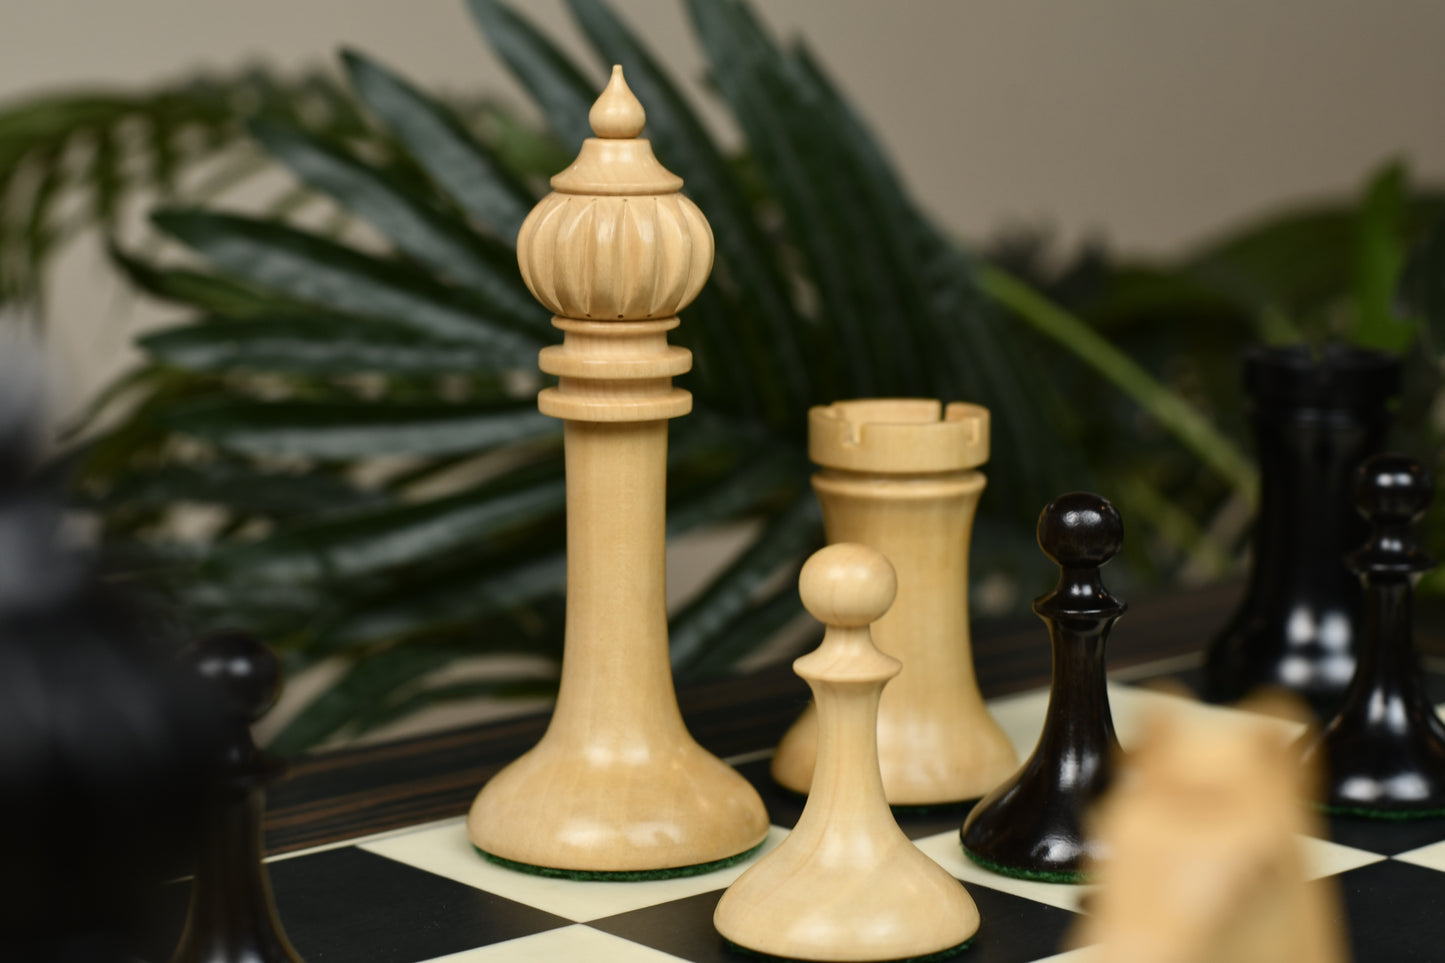 Reproduced 1910 Circa Lasker–Schlechter World Championship Chessmen in Genuine Ebony Wood & Boxwood - 4.5" King